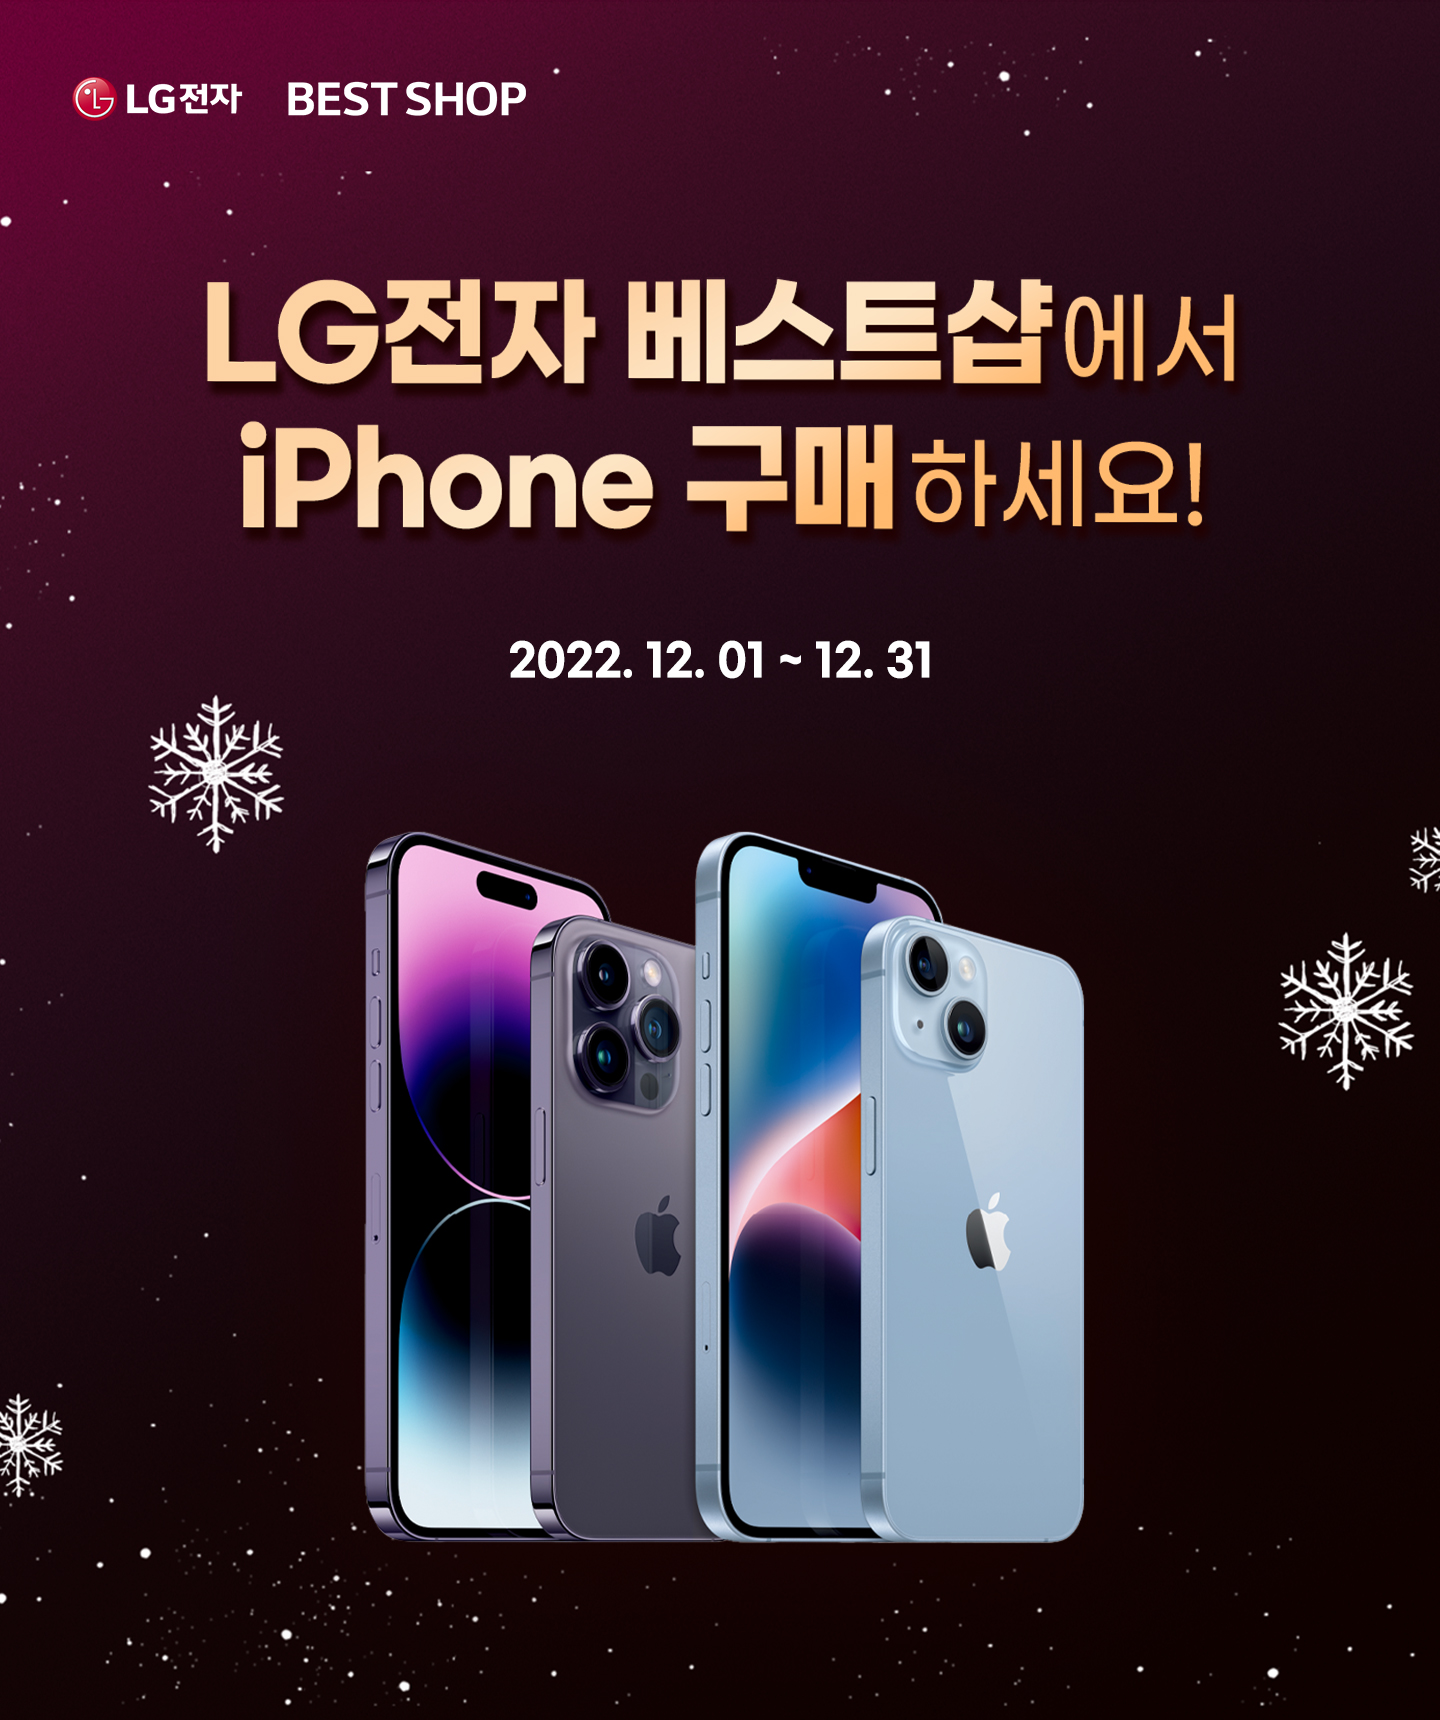 LG전자 베스트샵에서 iPhone 구매하세요!